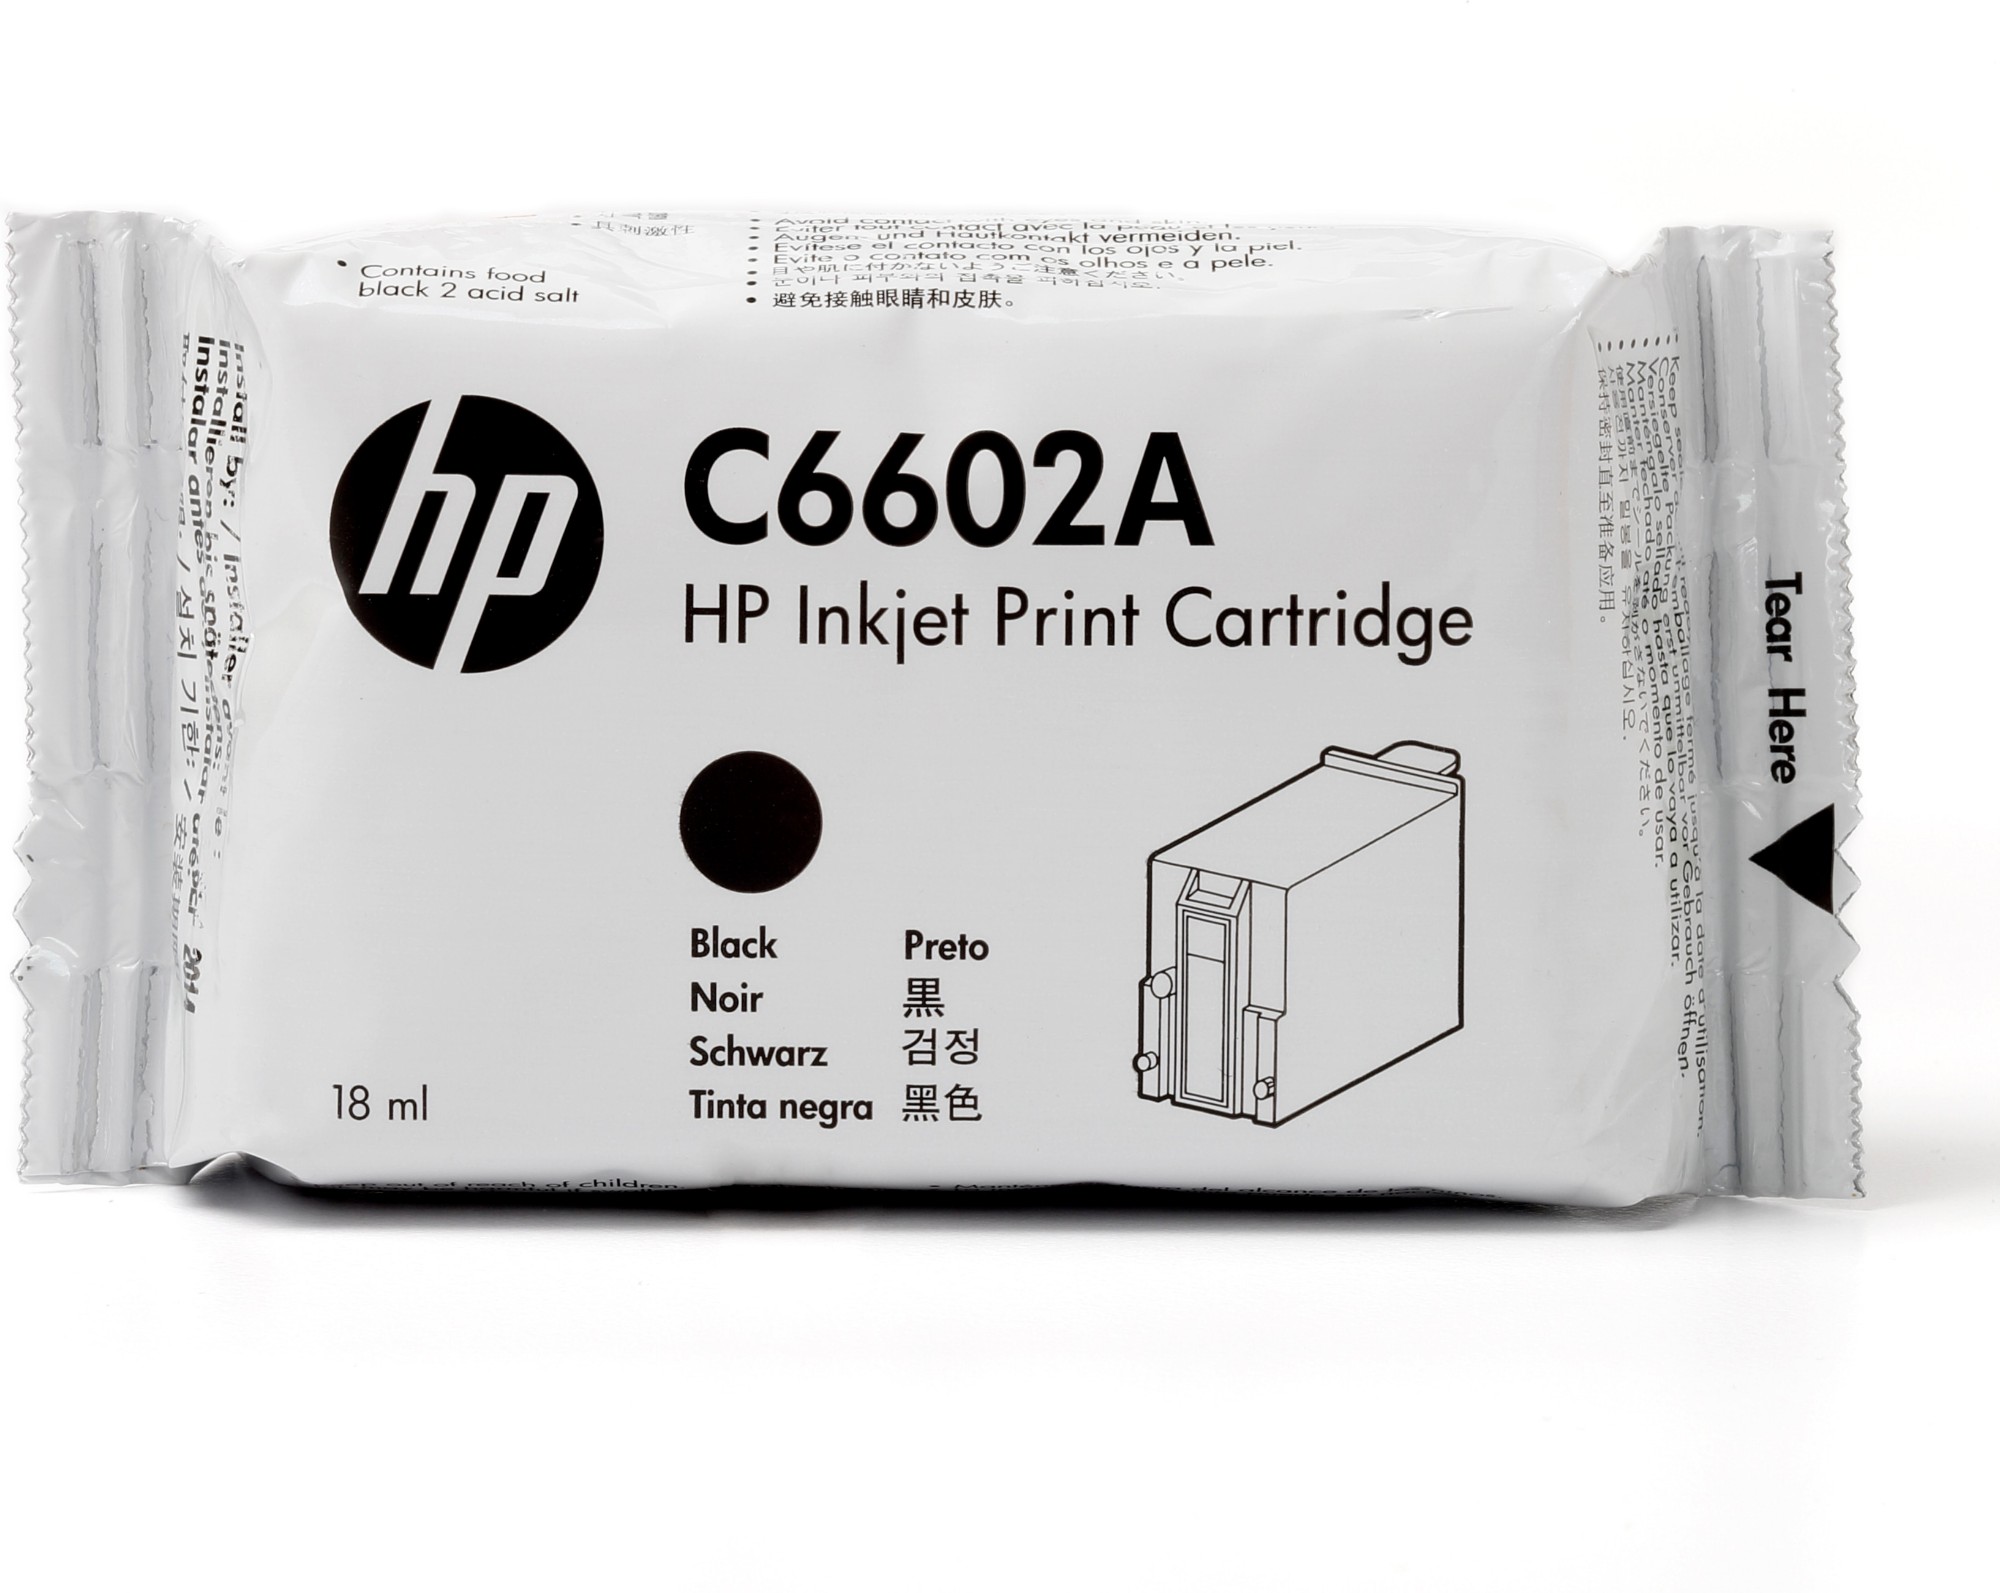 HP C6602A Printhead cartridge black 18ml for HP Addmaster IJ 6000